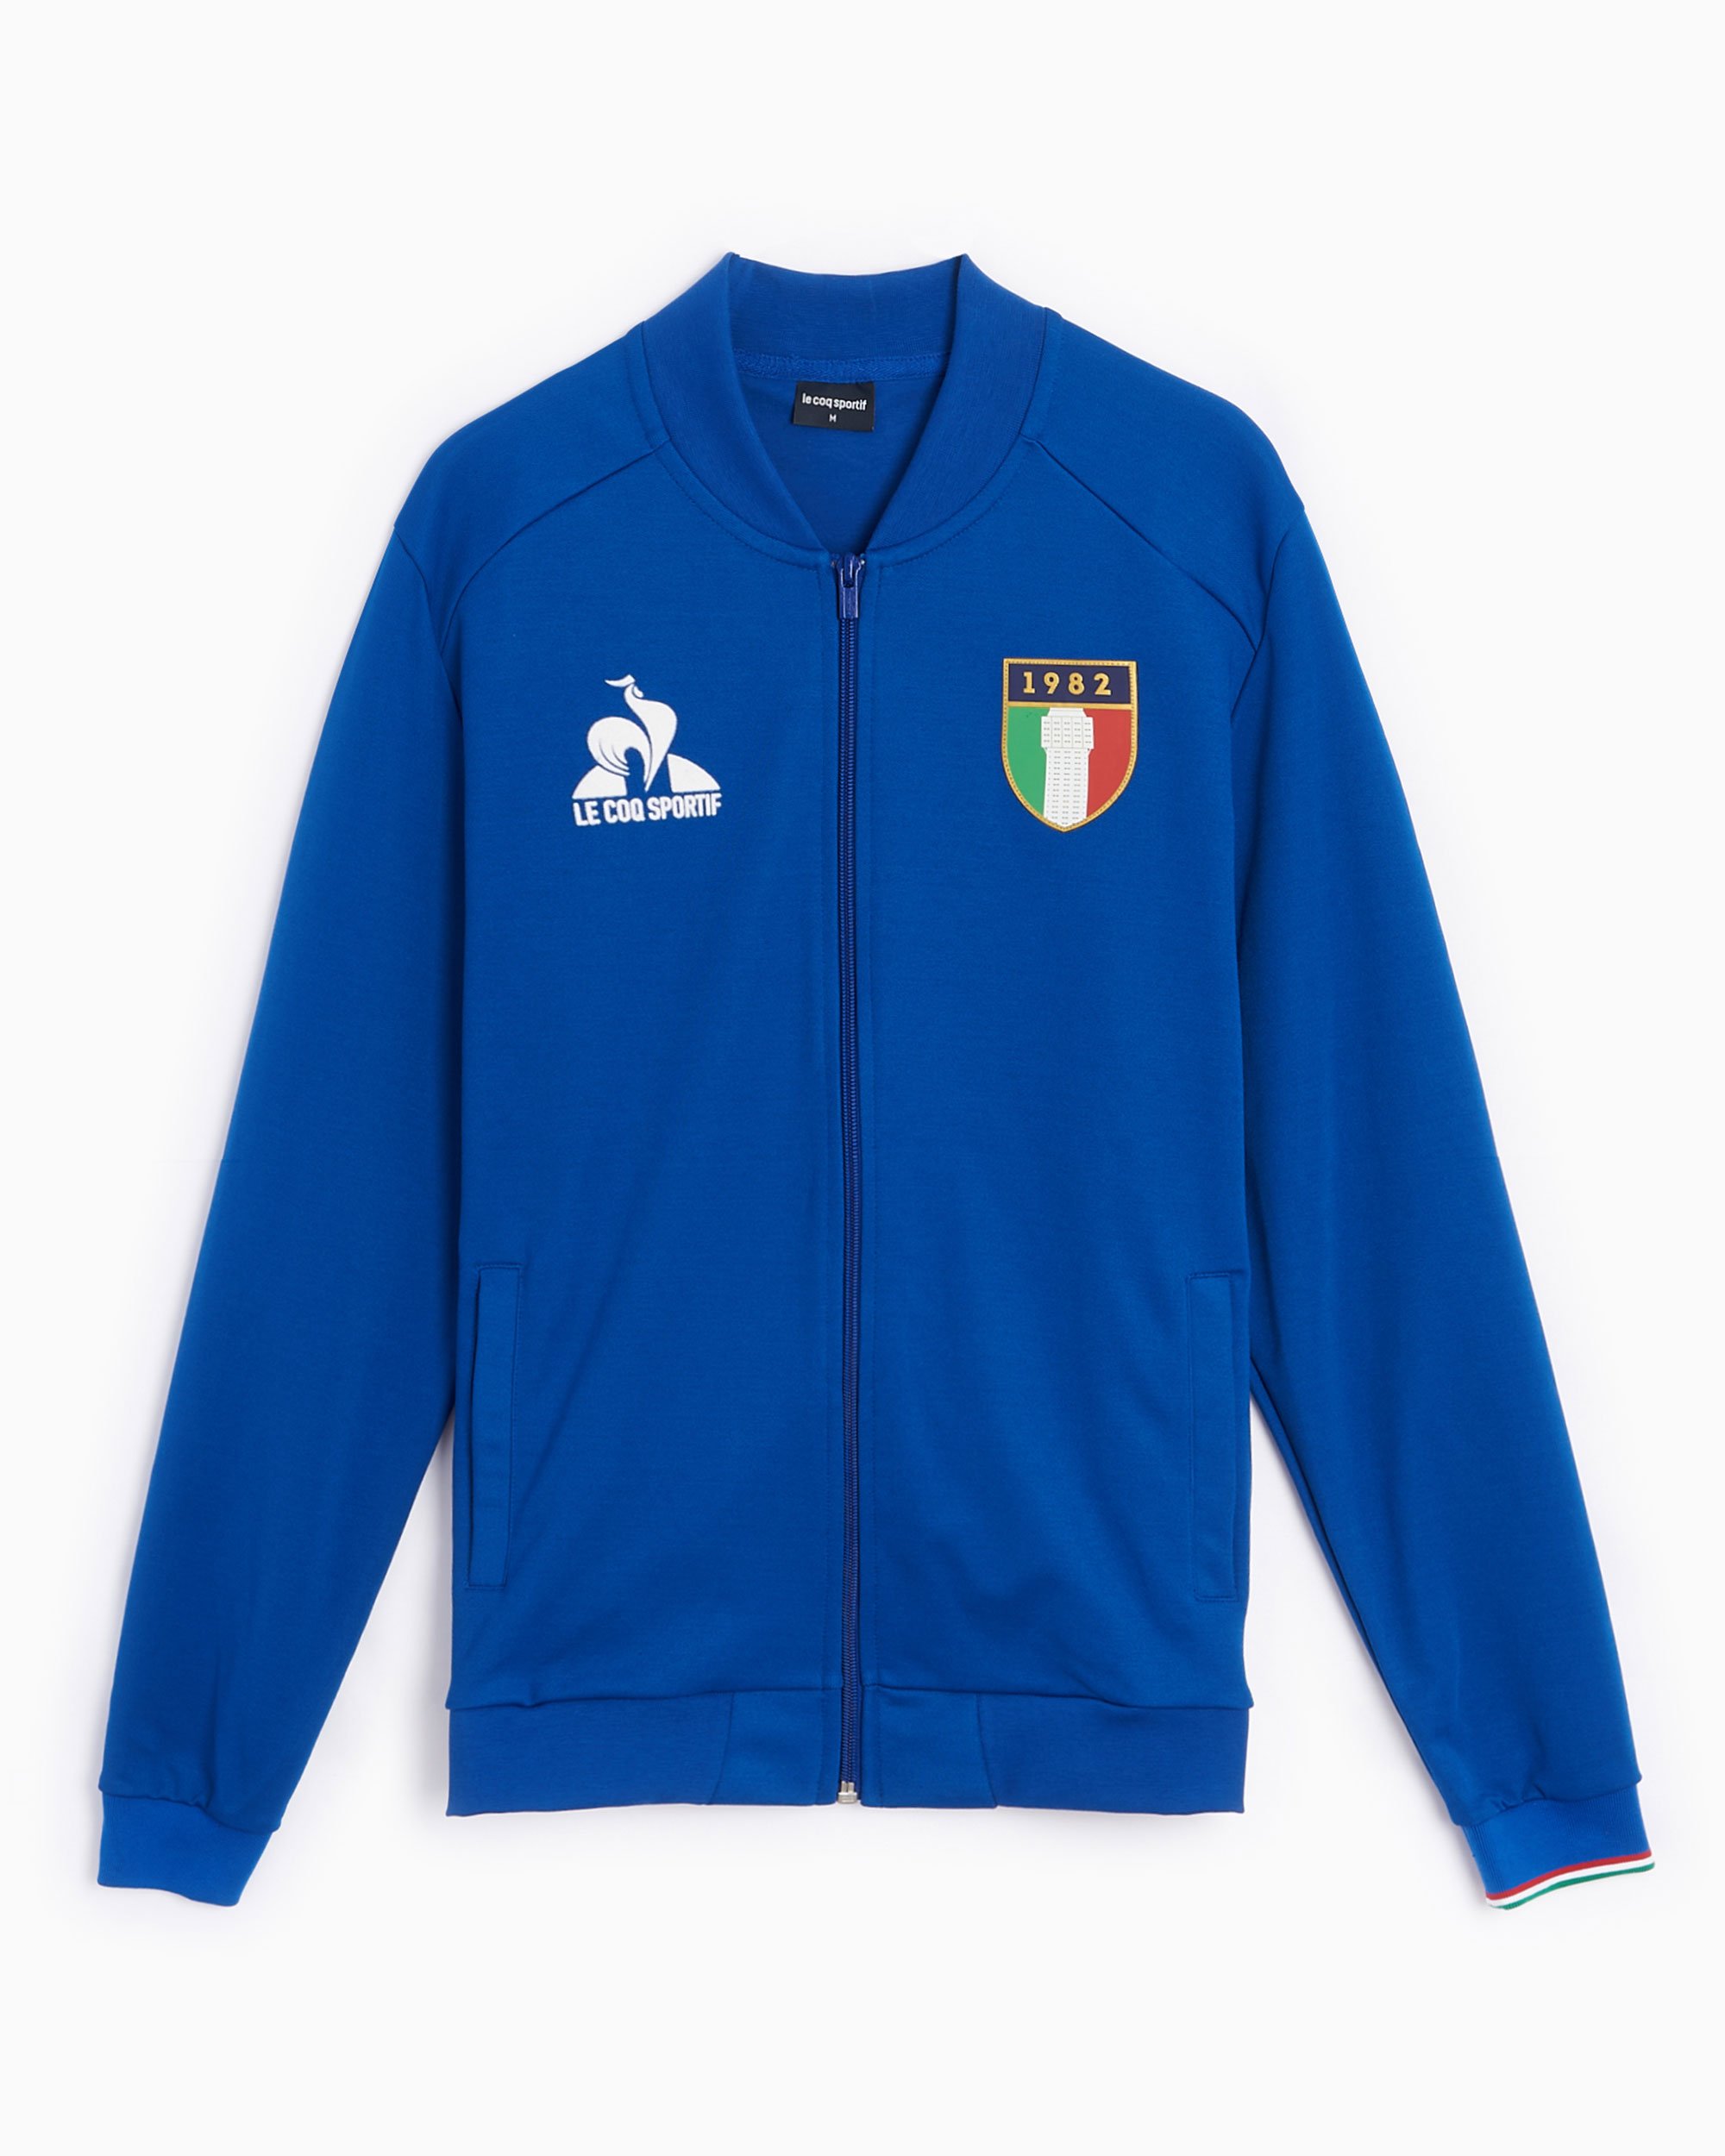 Le Coq Sportif x ITALY 82 AS VELASCA Unisex Jacket Blue 2220914| Buy Online at FOOTDISTRICT